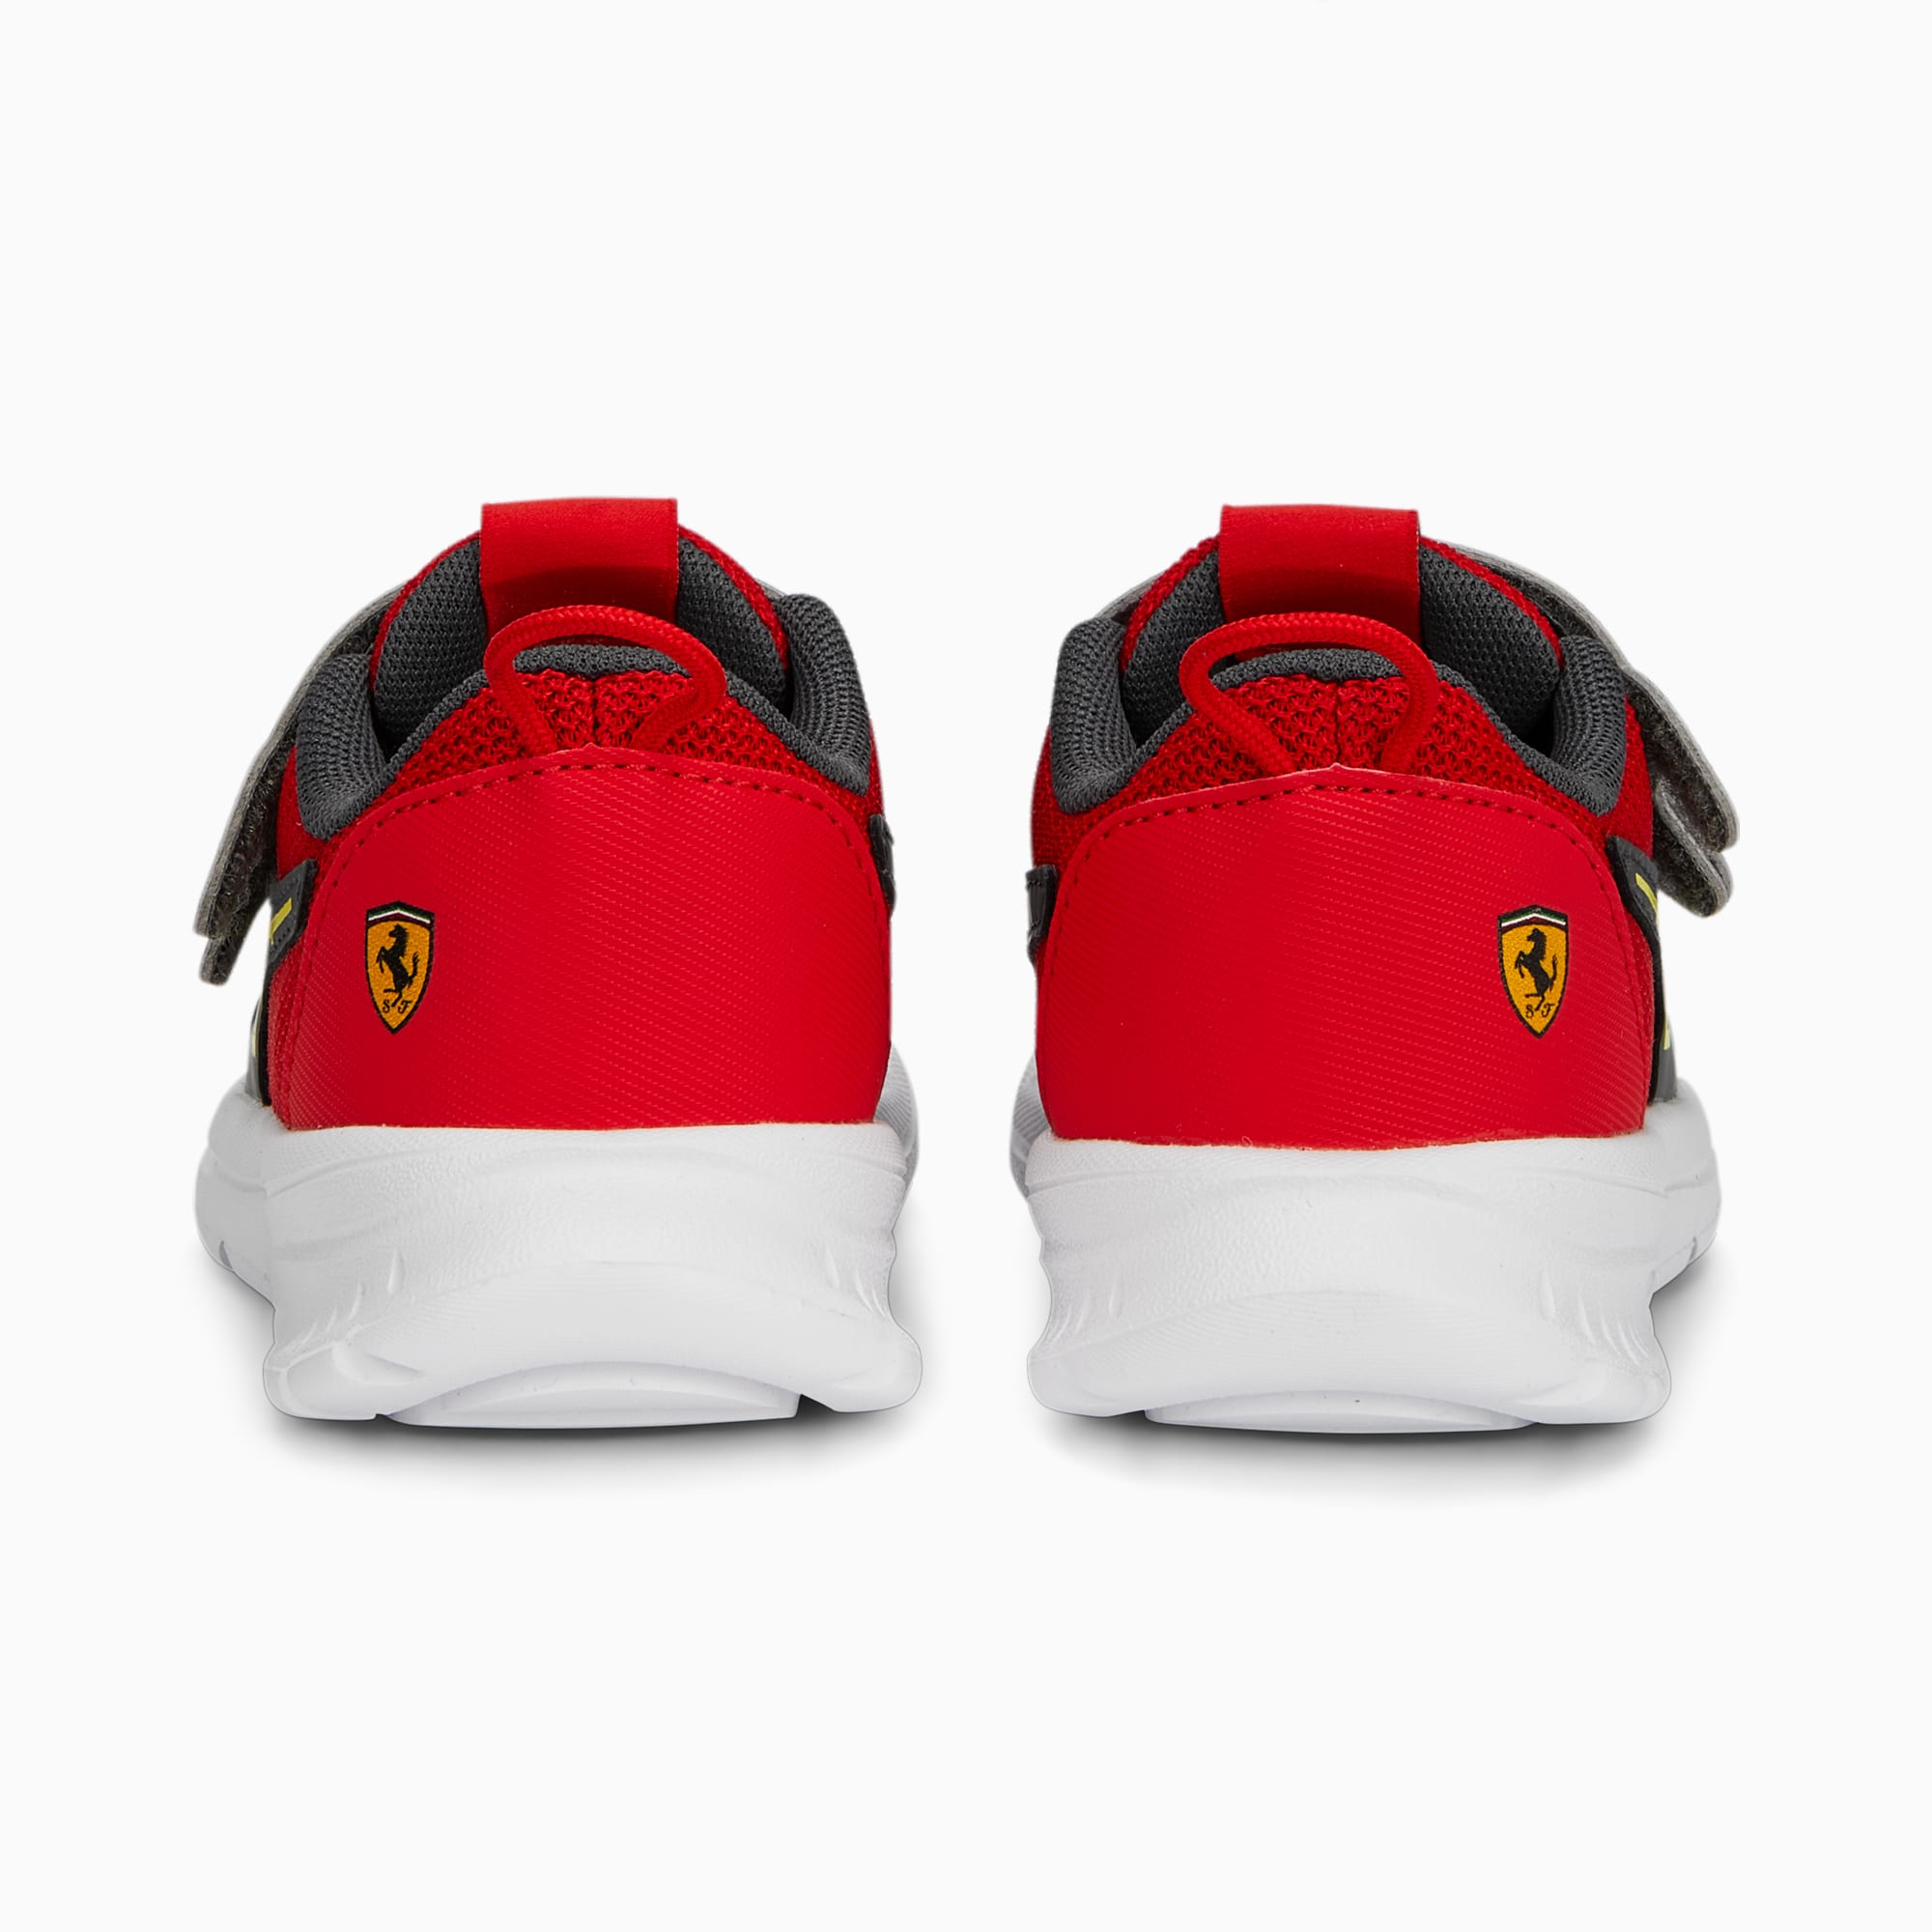 PUMA Scuderia Ferrari Evolve Ptc V Motorsport Shoes Babies, Red